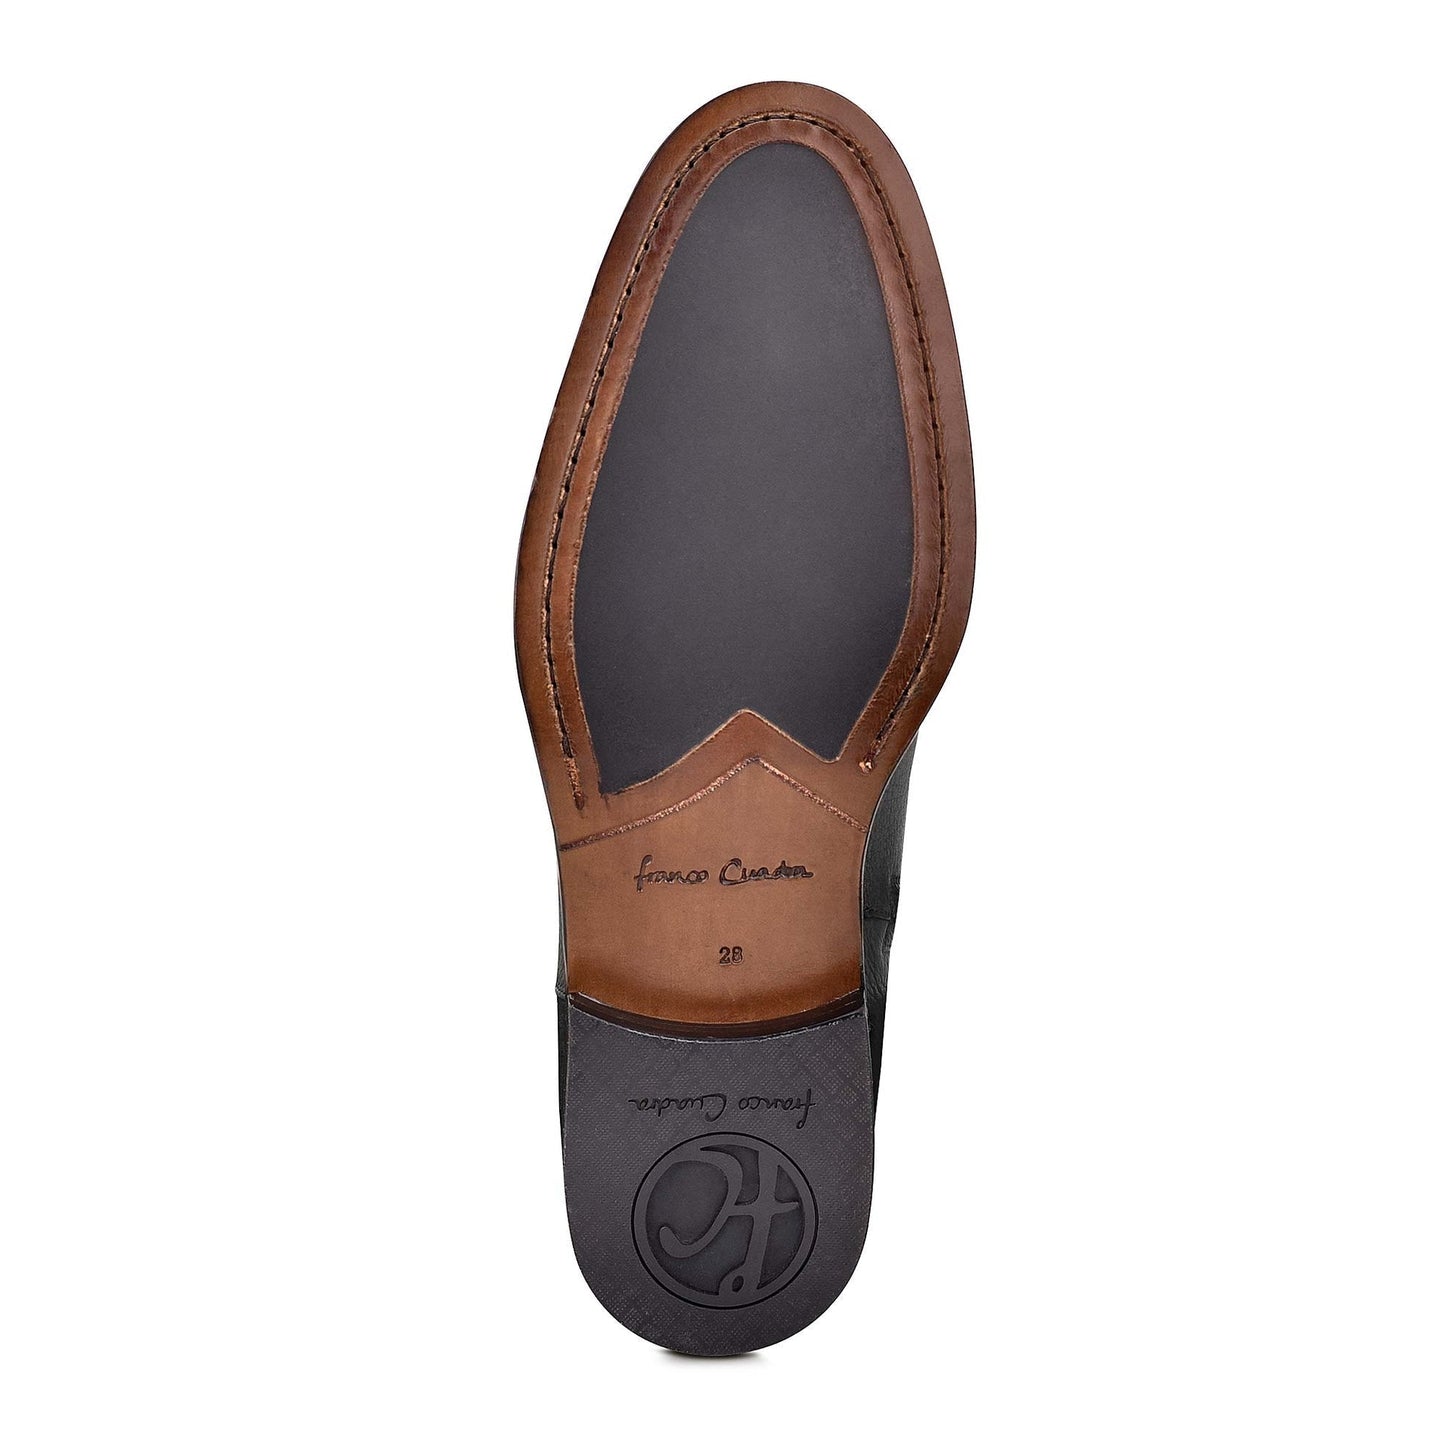 G08VNVN - Cuadra black casual fashion deer leather ankle boots for men-FRANCO CUADRA-Kuet-Cuadra-Boots